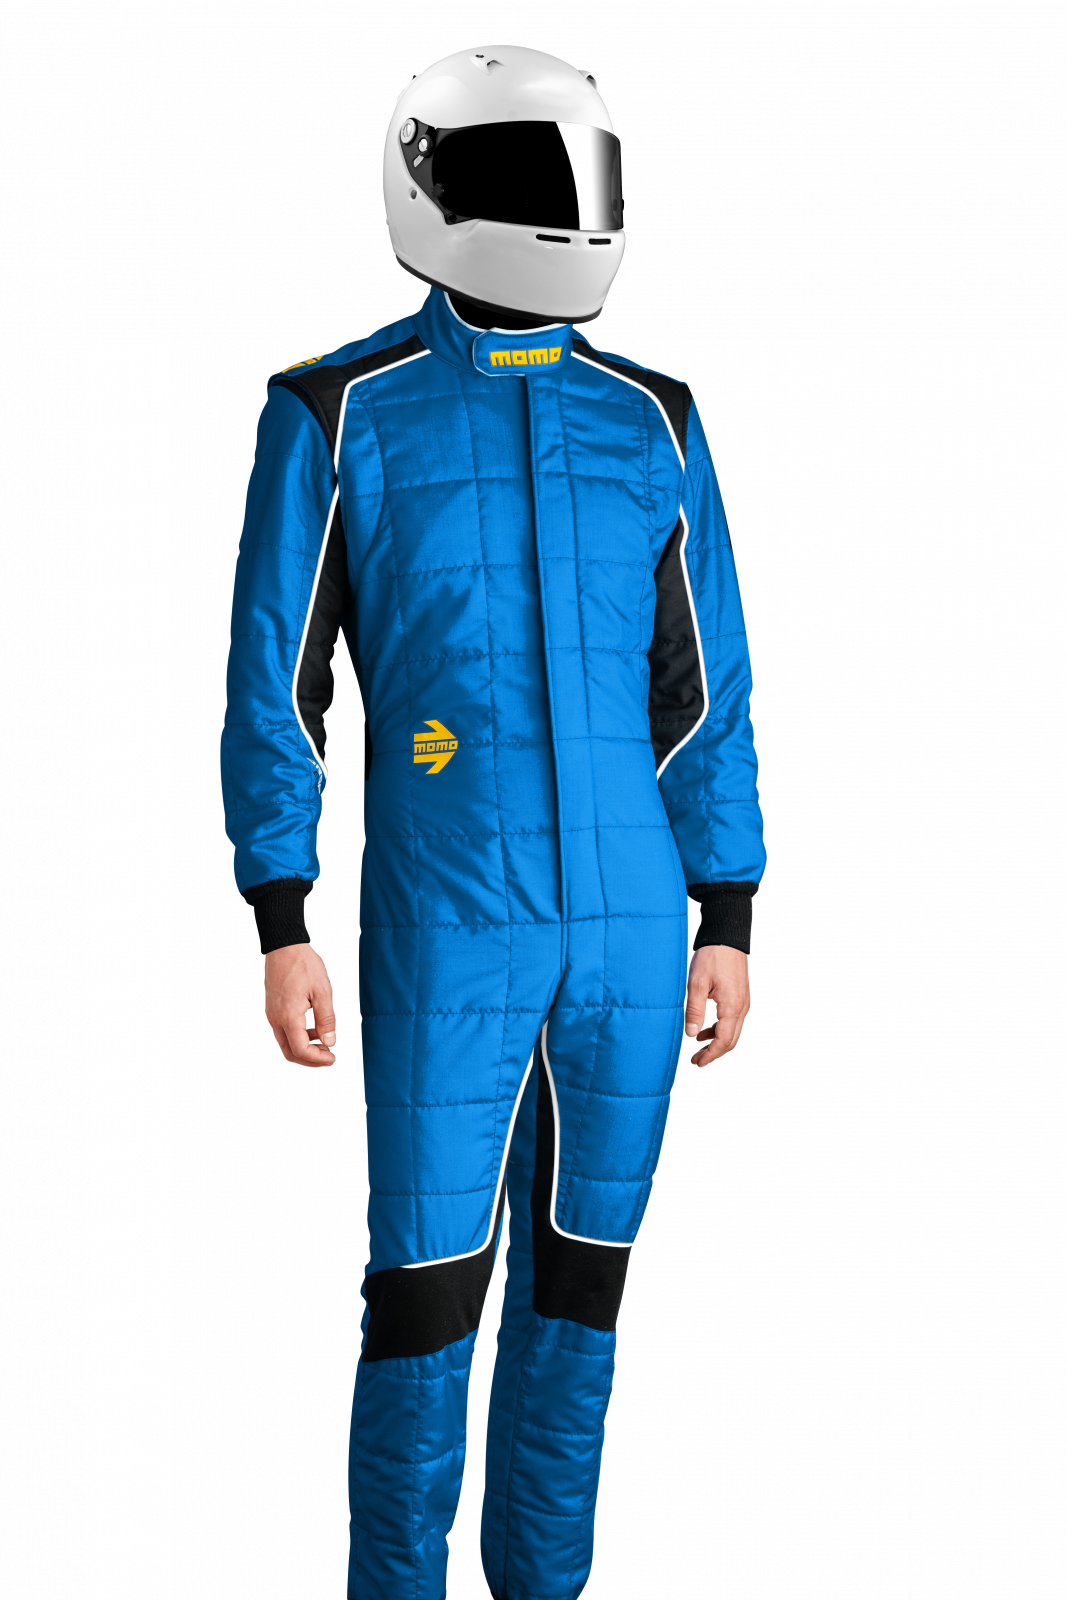 MOMO Corsa Evo Blue Size 62 Racing Suit TUCOEVOBLU62